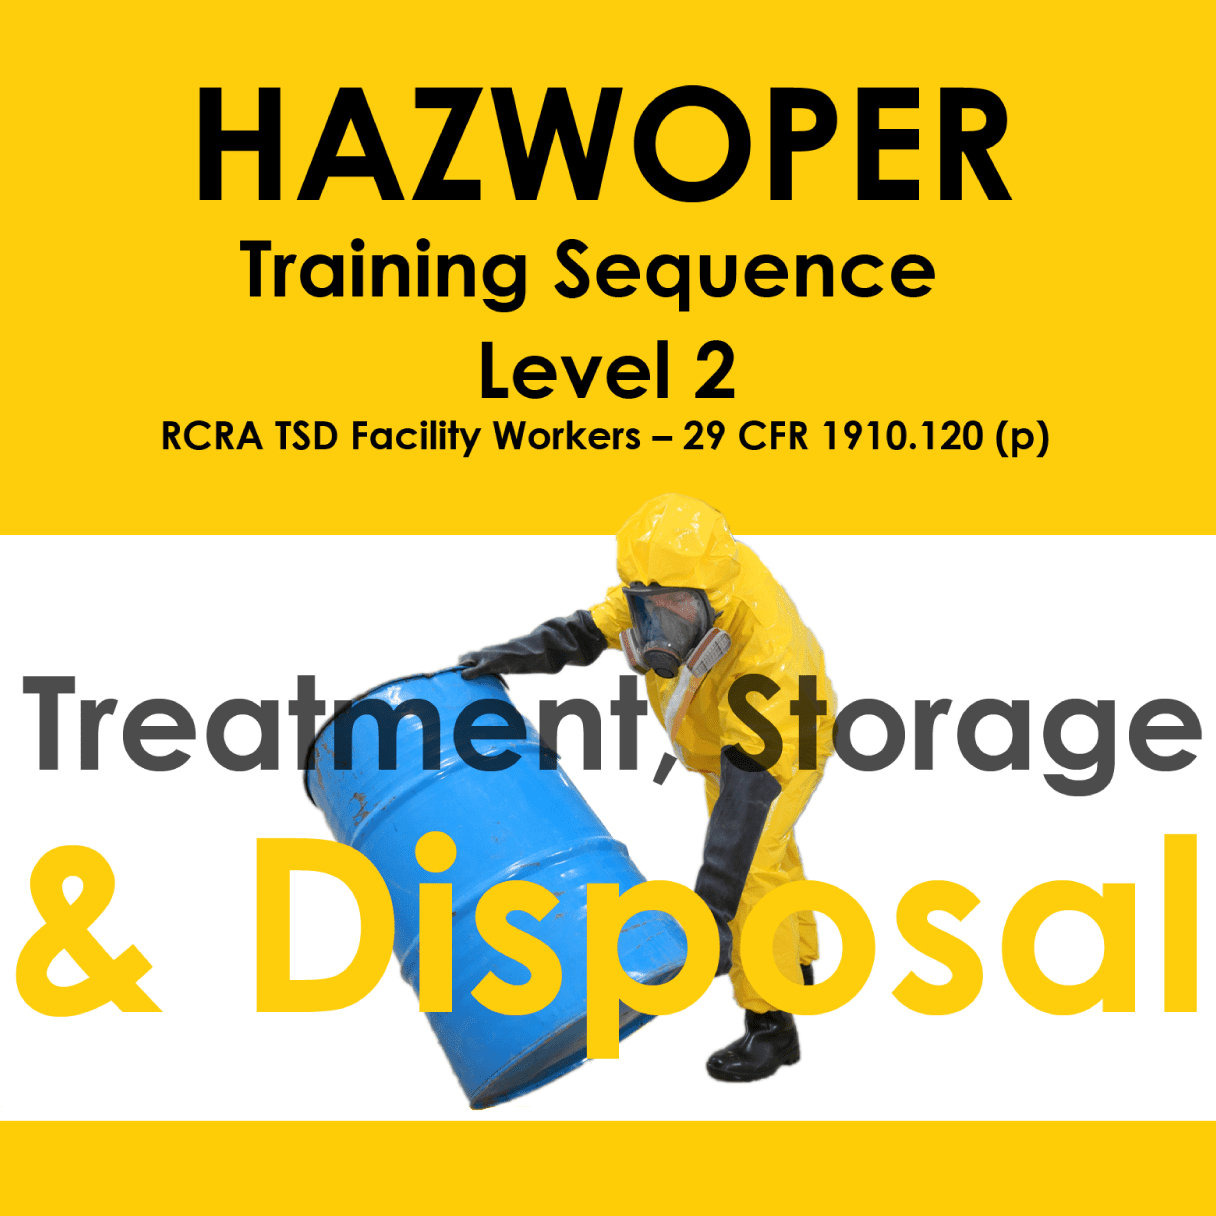 hazwoper training sequence level 2